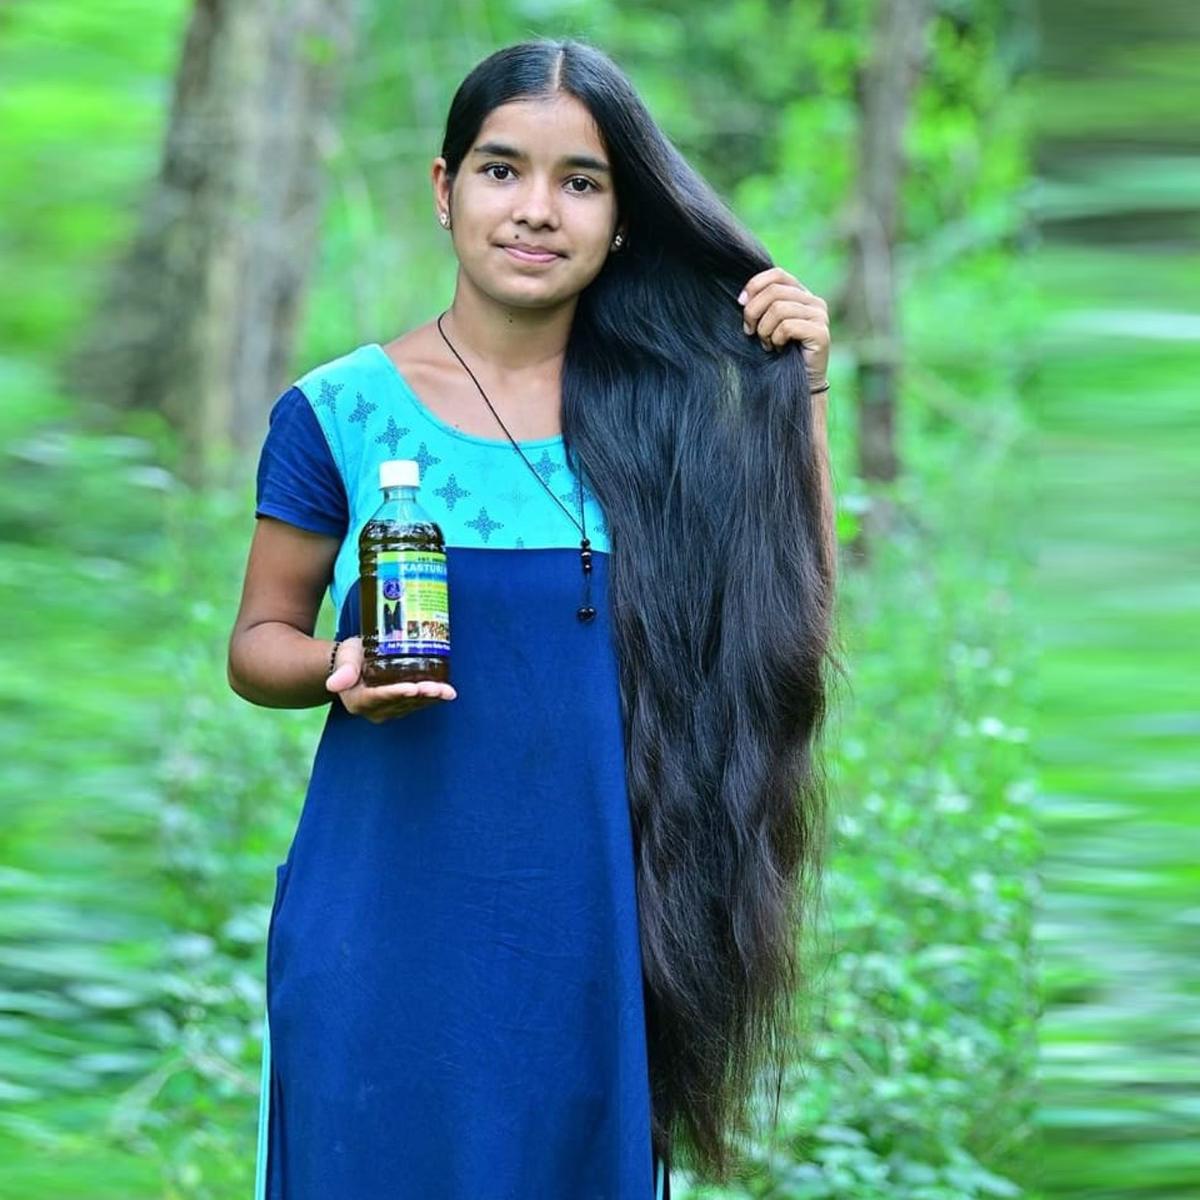 Adivasi Bringamoolaka Herbal Hair Oil